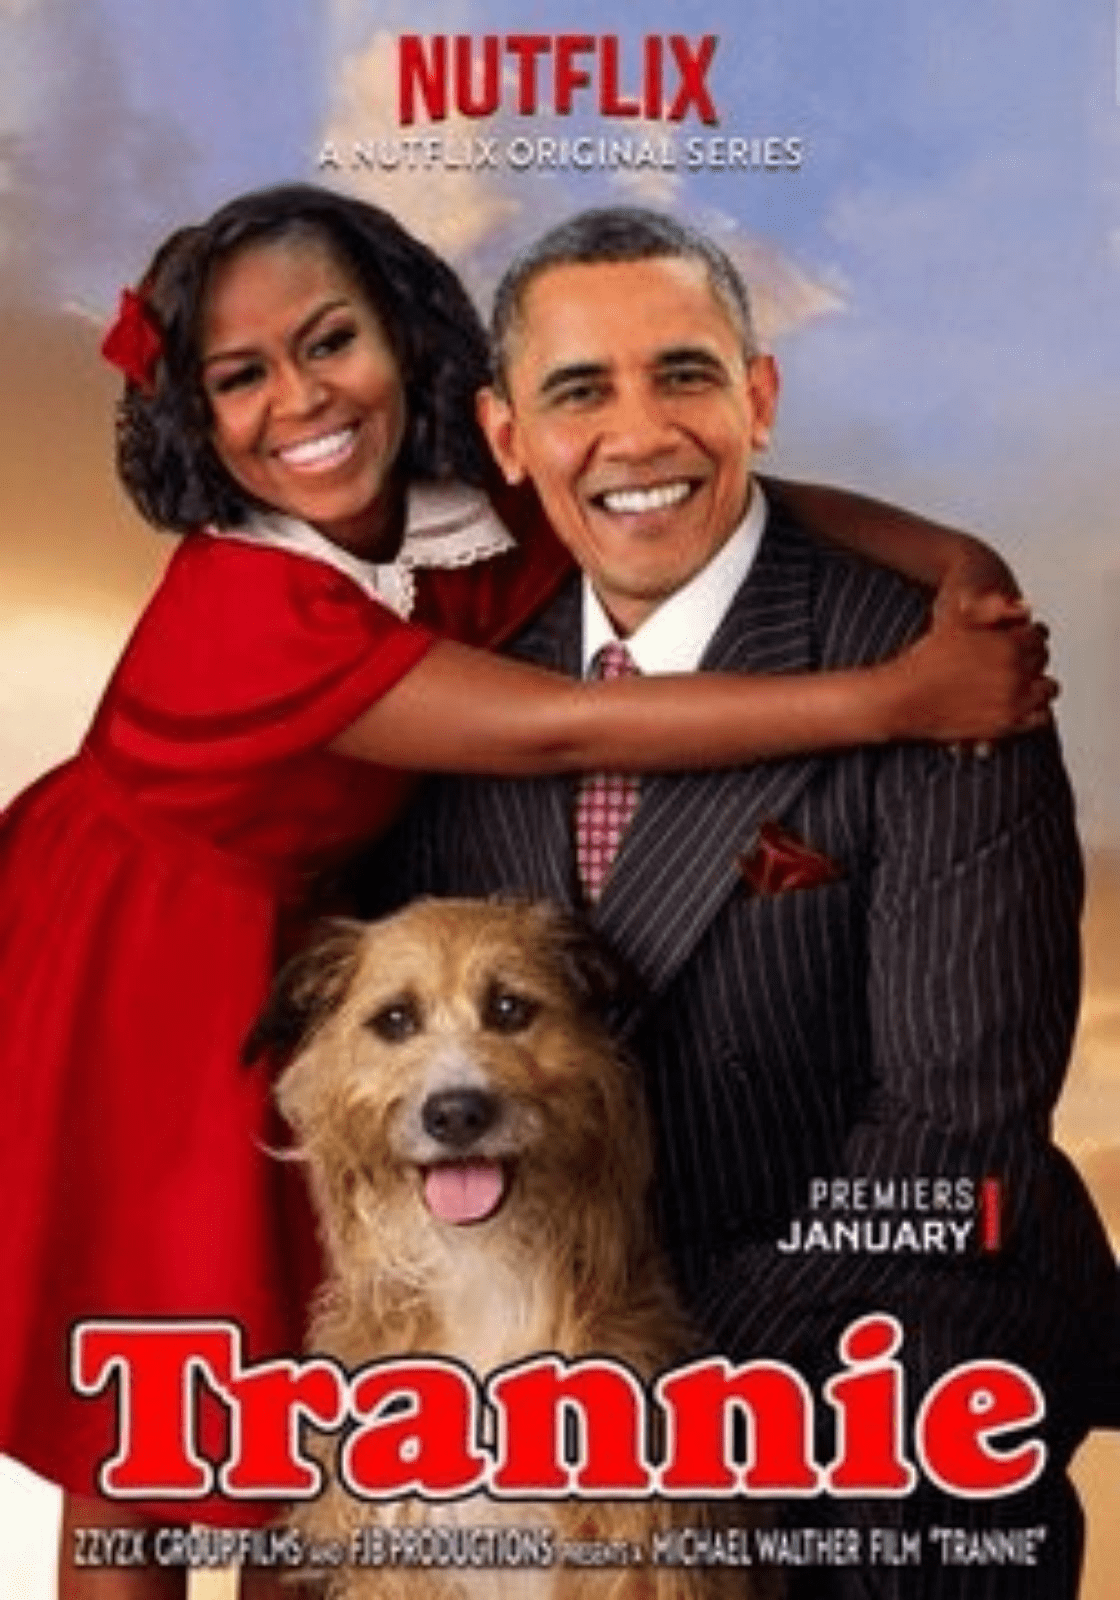 Big Mike & Obama to Star in Netfix Remake of Annie